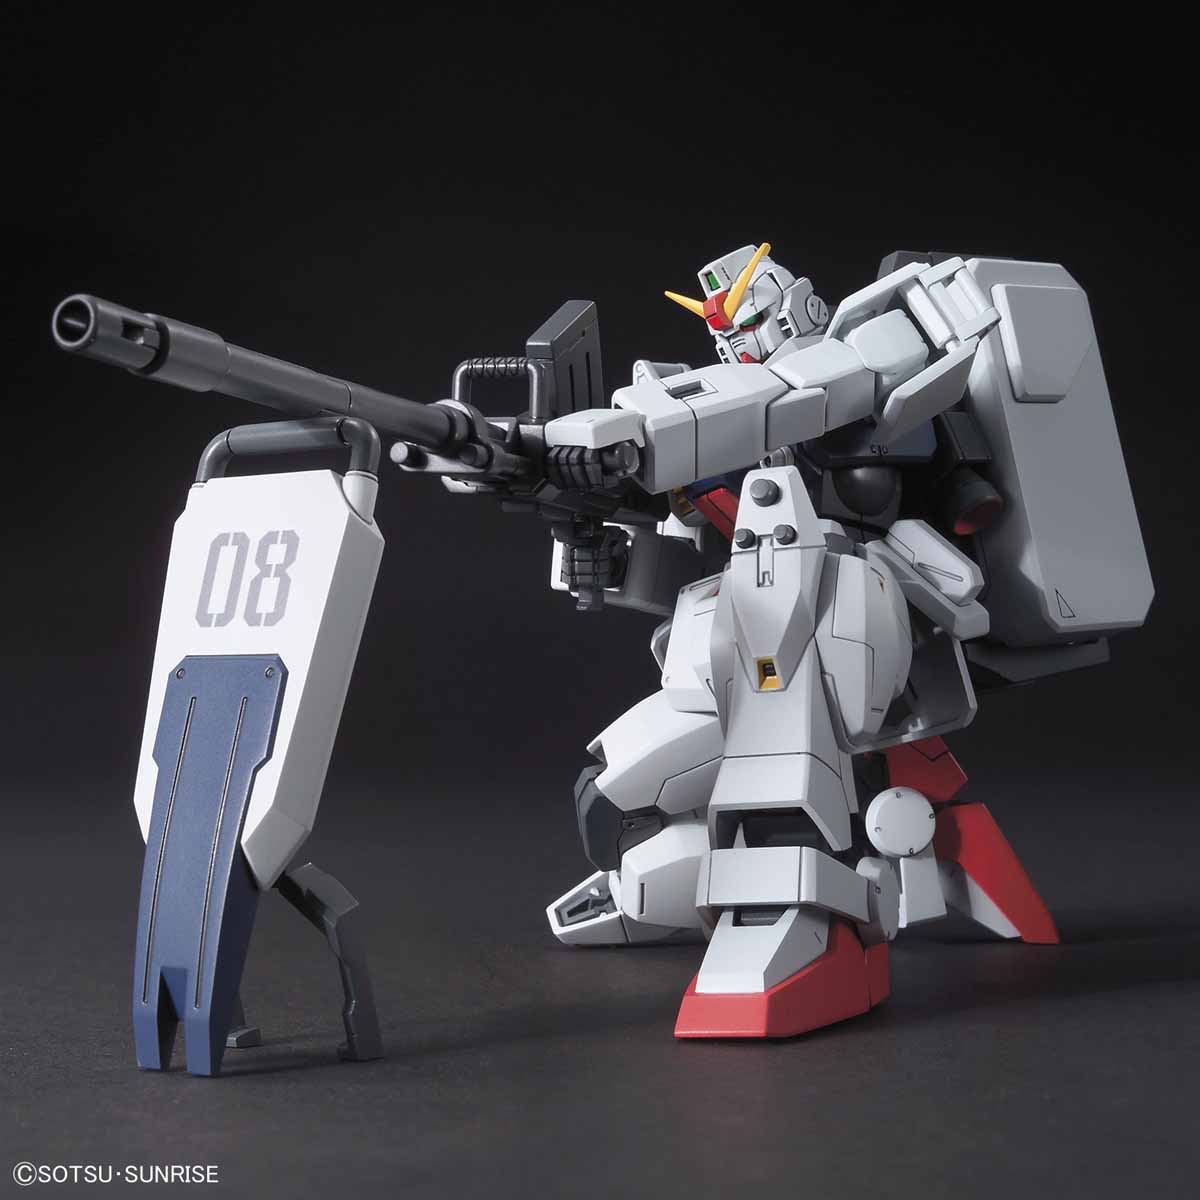 HG RX-79[G] Gundam Ground Type 1/144